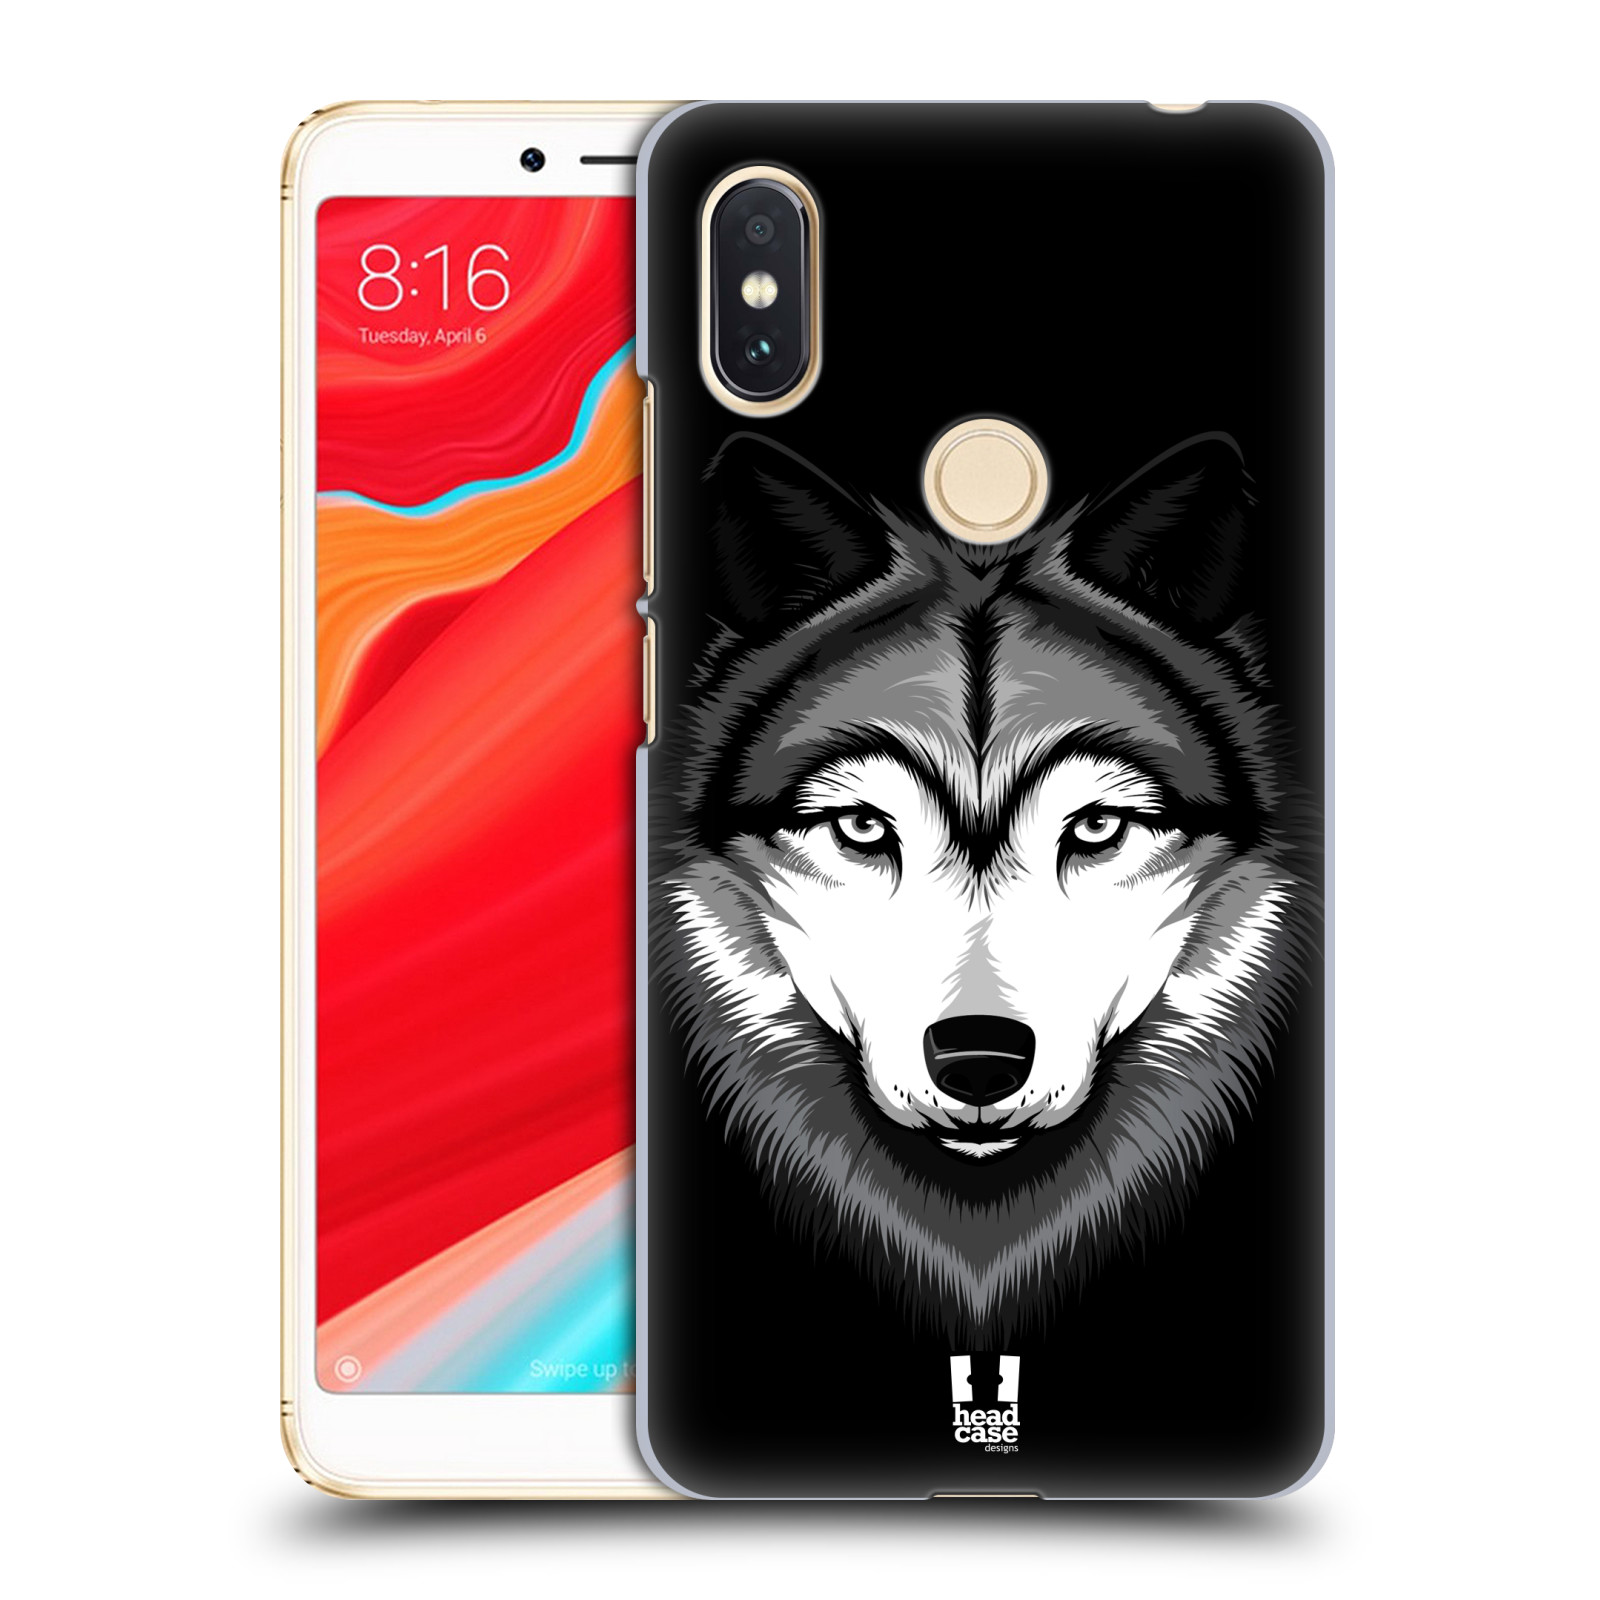 HEAD CASE plastový obal na mobil Xiaomi Redmi S2 vzor Zvíře kreslená tvář 2 vlk